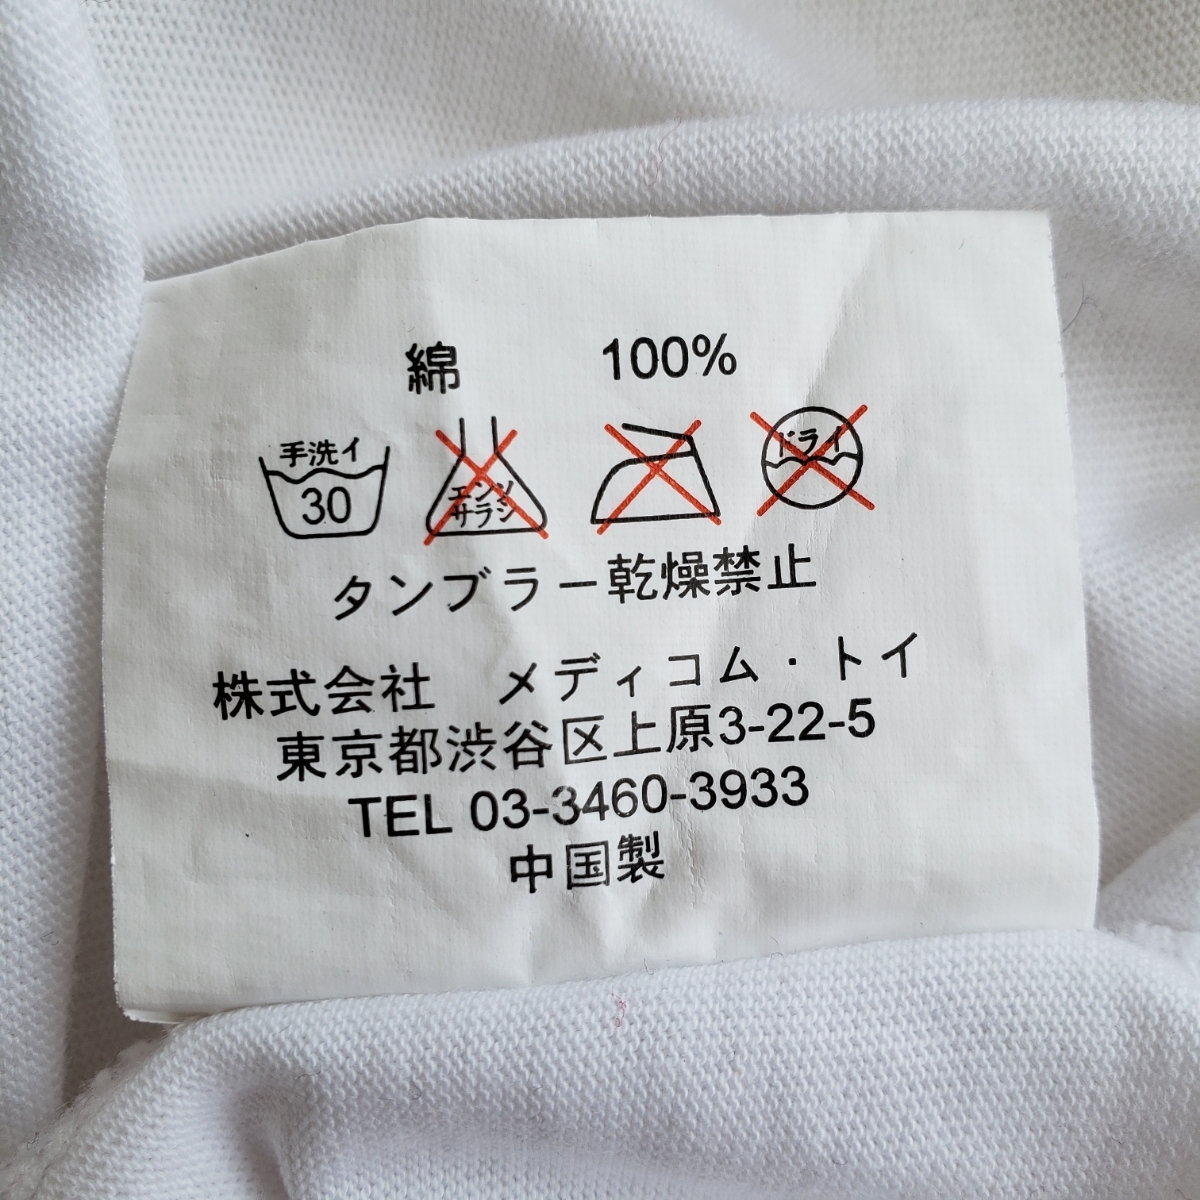 Mサイズ original fake Tシャツ kaws オリジナル フェイク カウズ tee 白 ホワイト white メディコムトイ kaws holiday JAPAN T-shirt